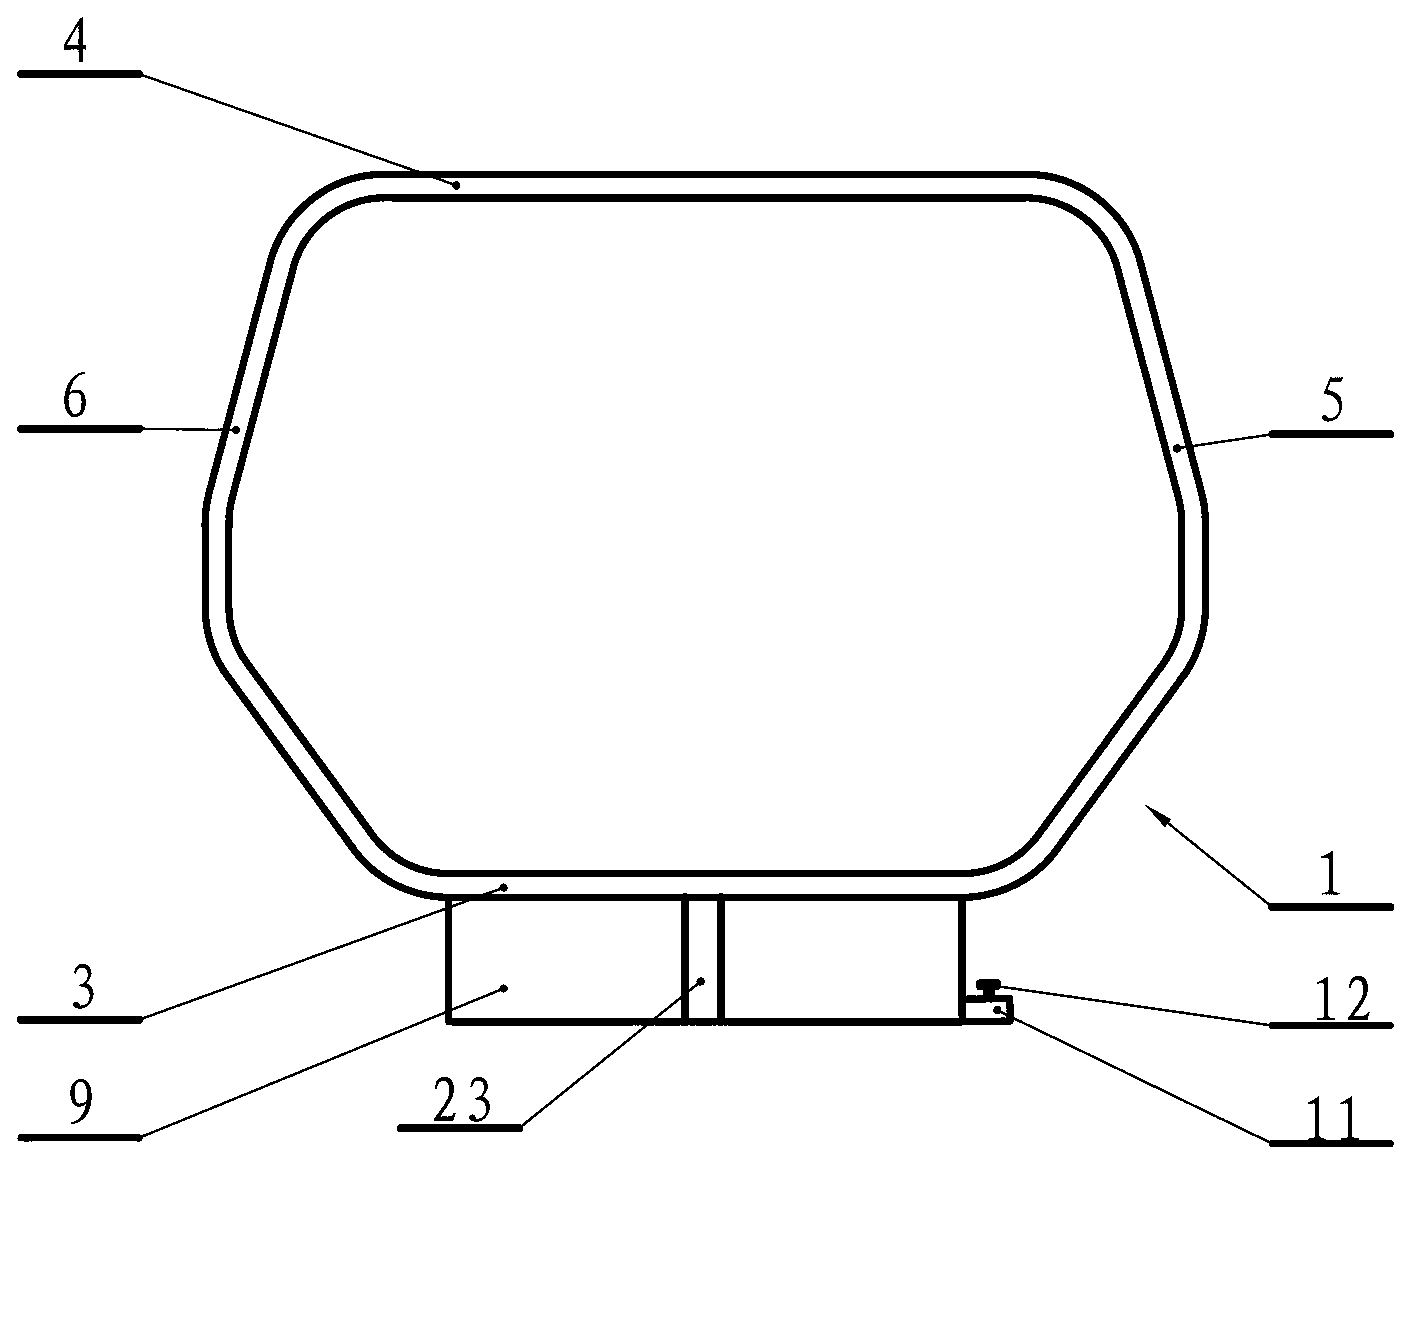 Non-compression type environmental sanitation compartment with liquid storage box and environmental sanitation vehicle with environmental sanitation compartment